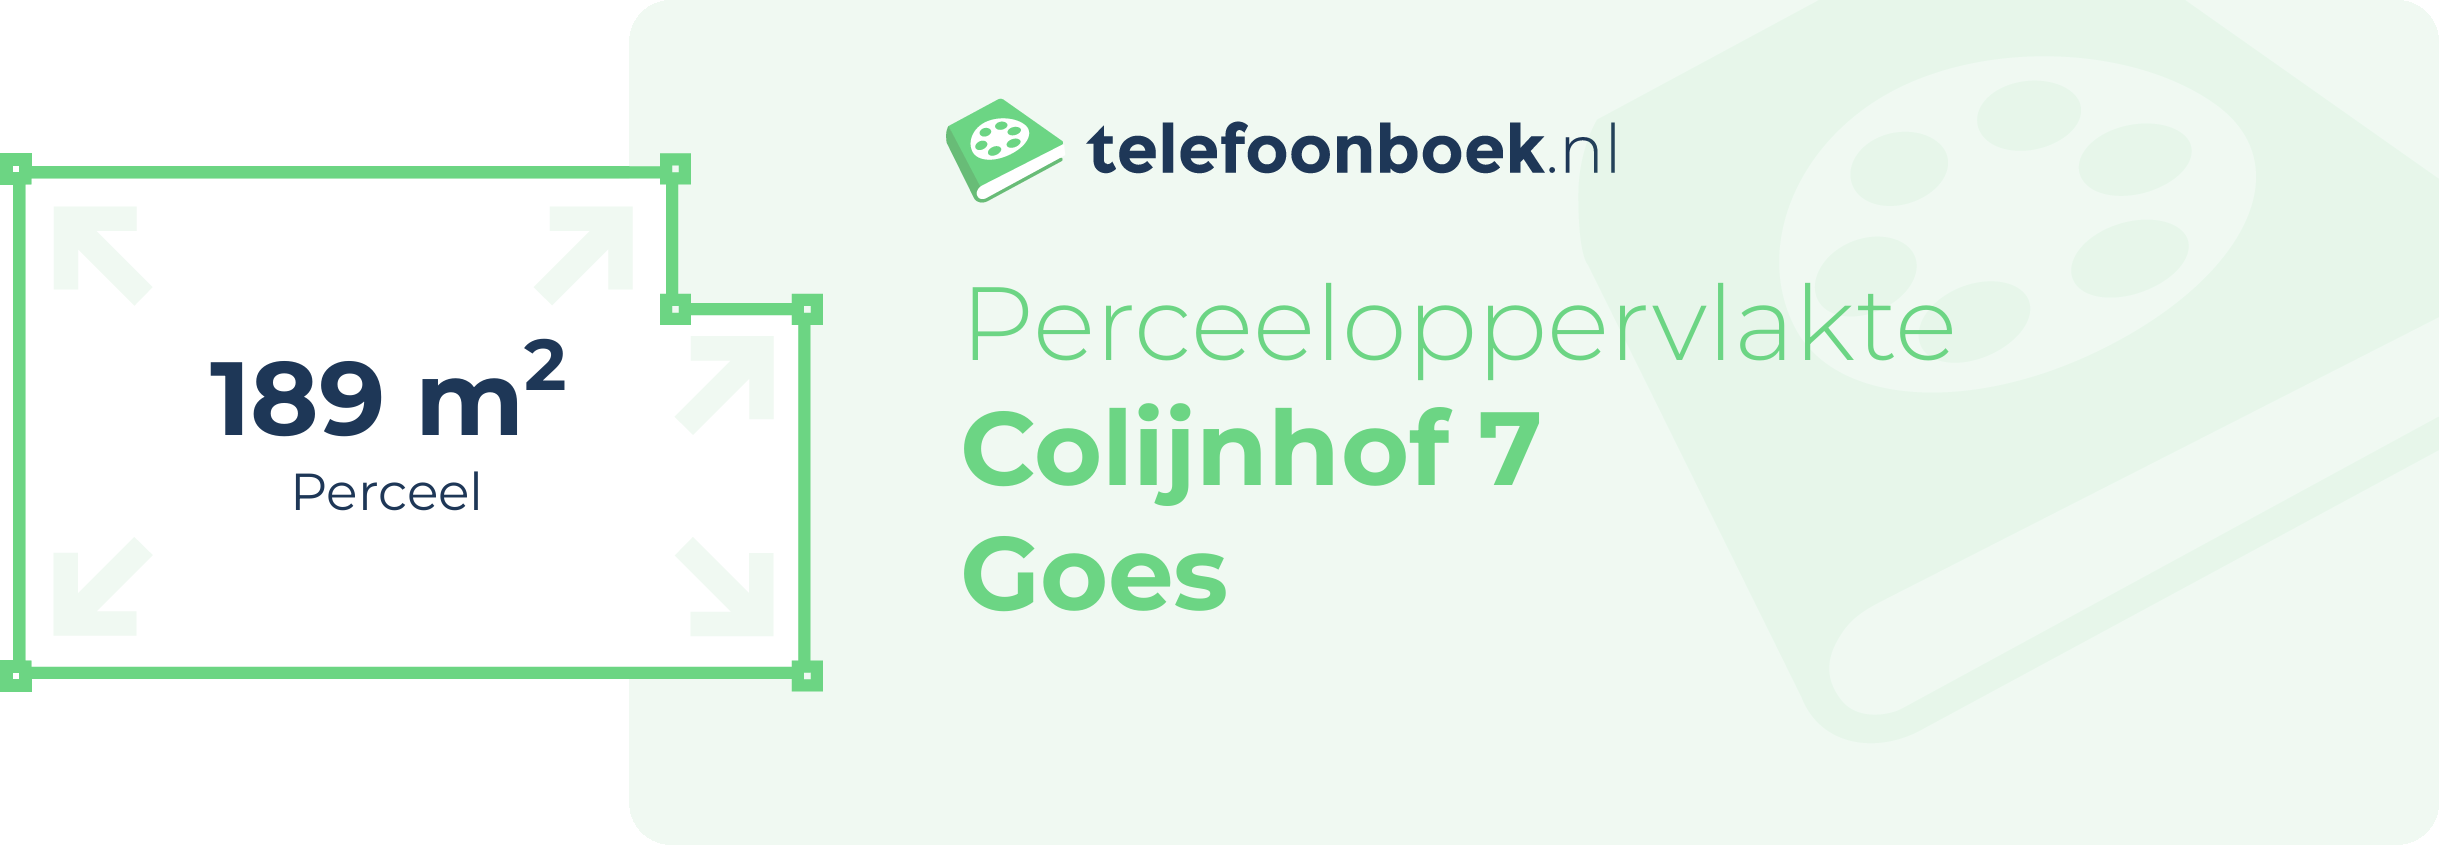 Perceeloppervlakte Colijnhof 7 Goes